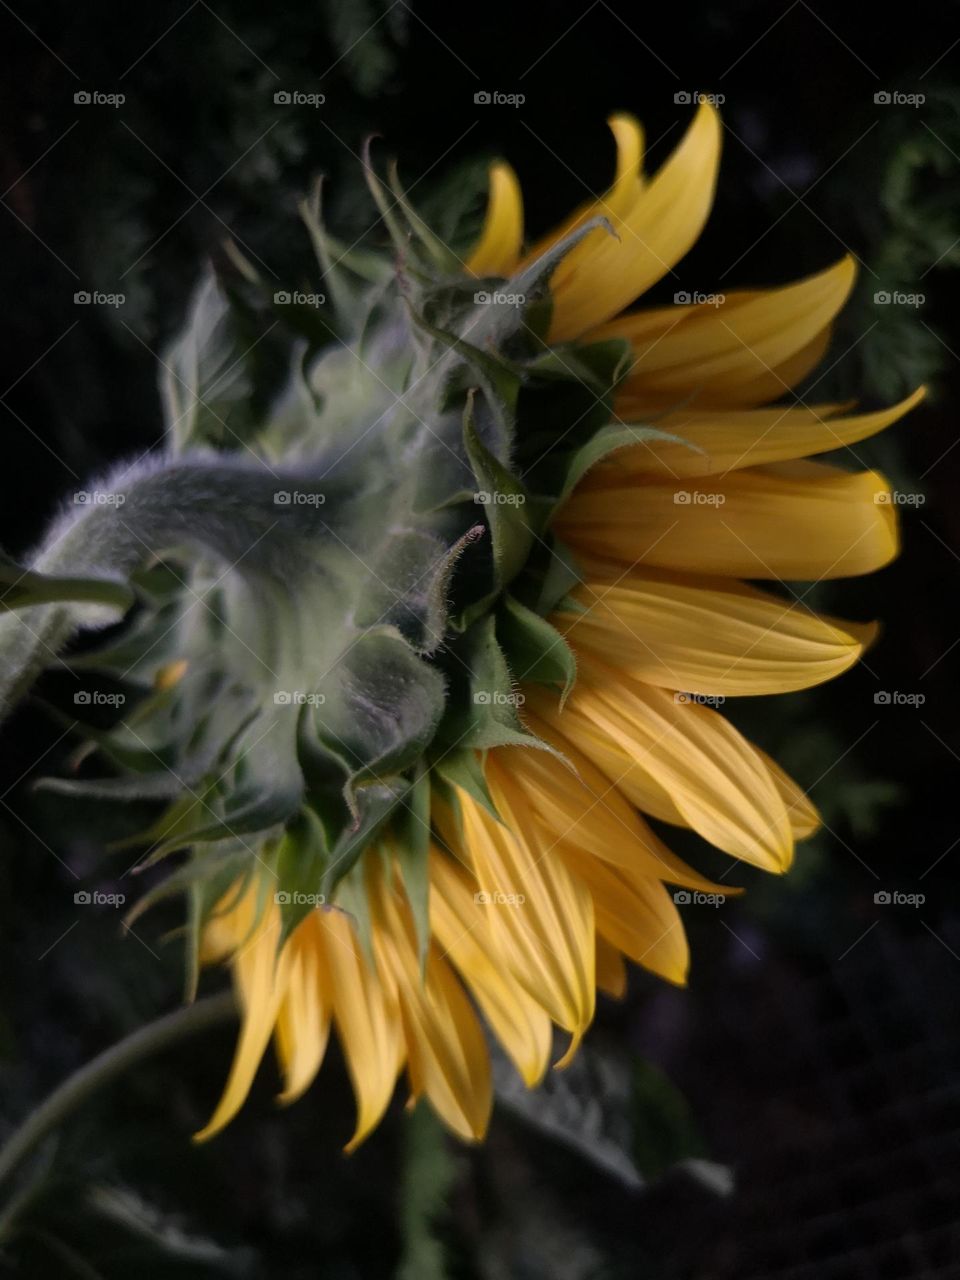 Sunflower on the black background